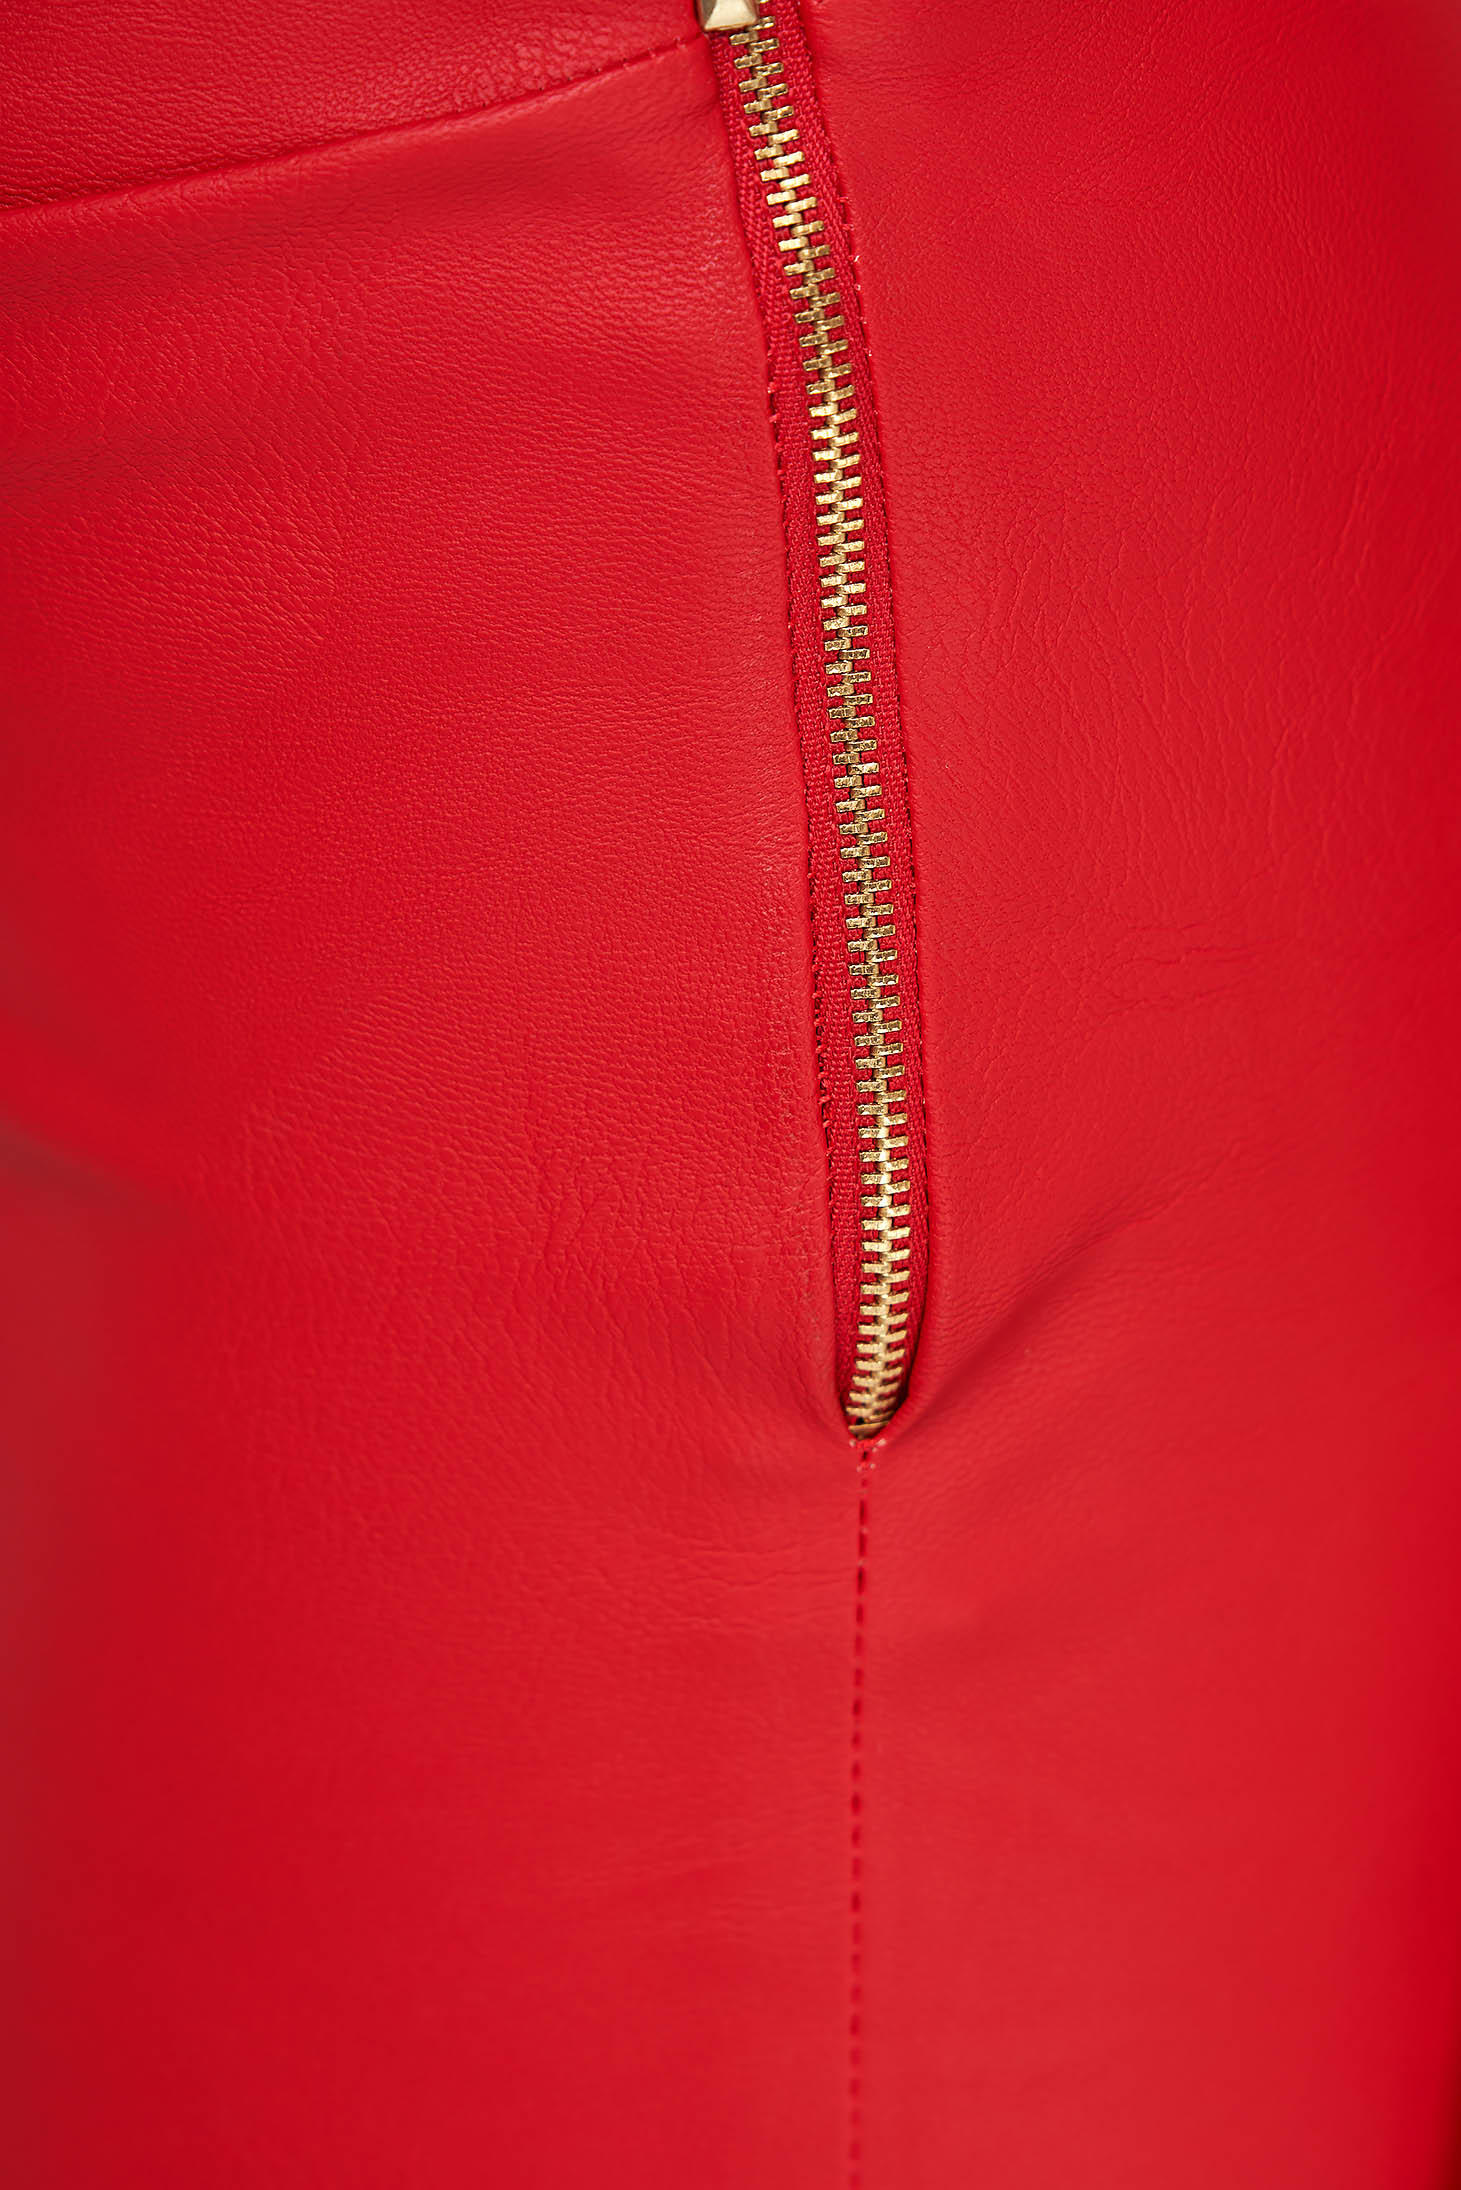 Pantaloni din piele ecologica rosii conici cu talie inalta - StarShinerS 6 - StarShinerS.ro